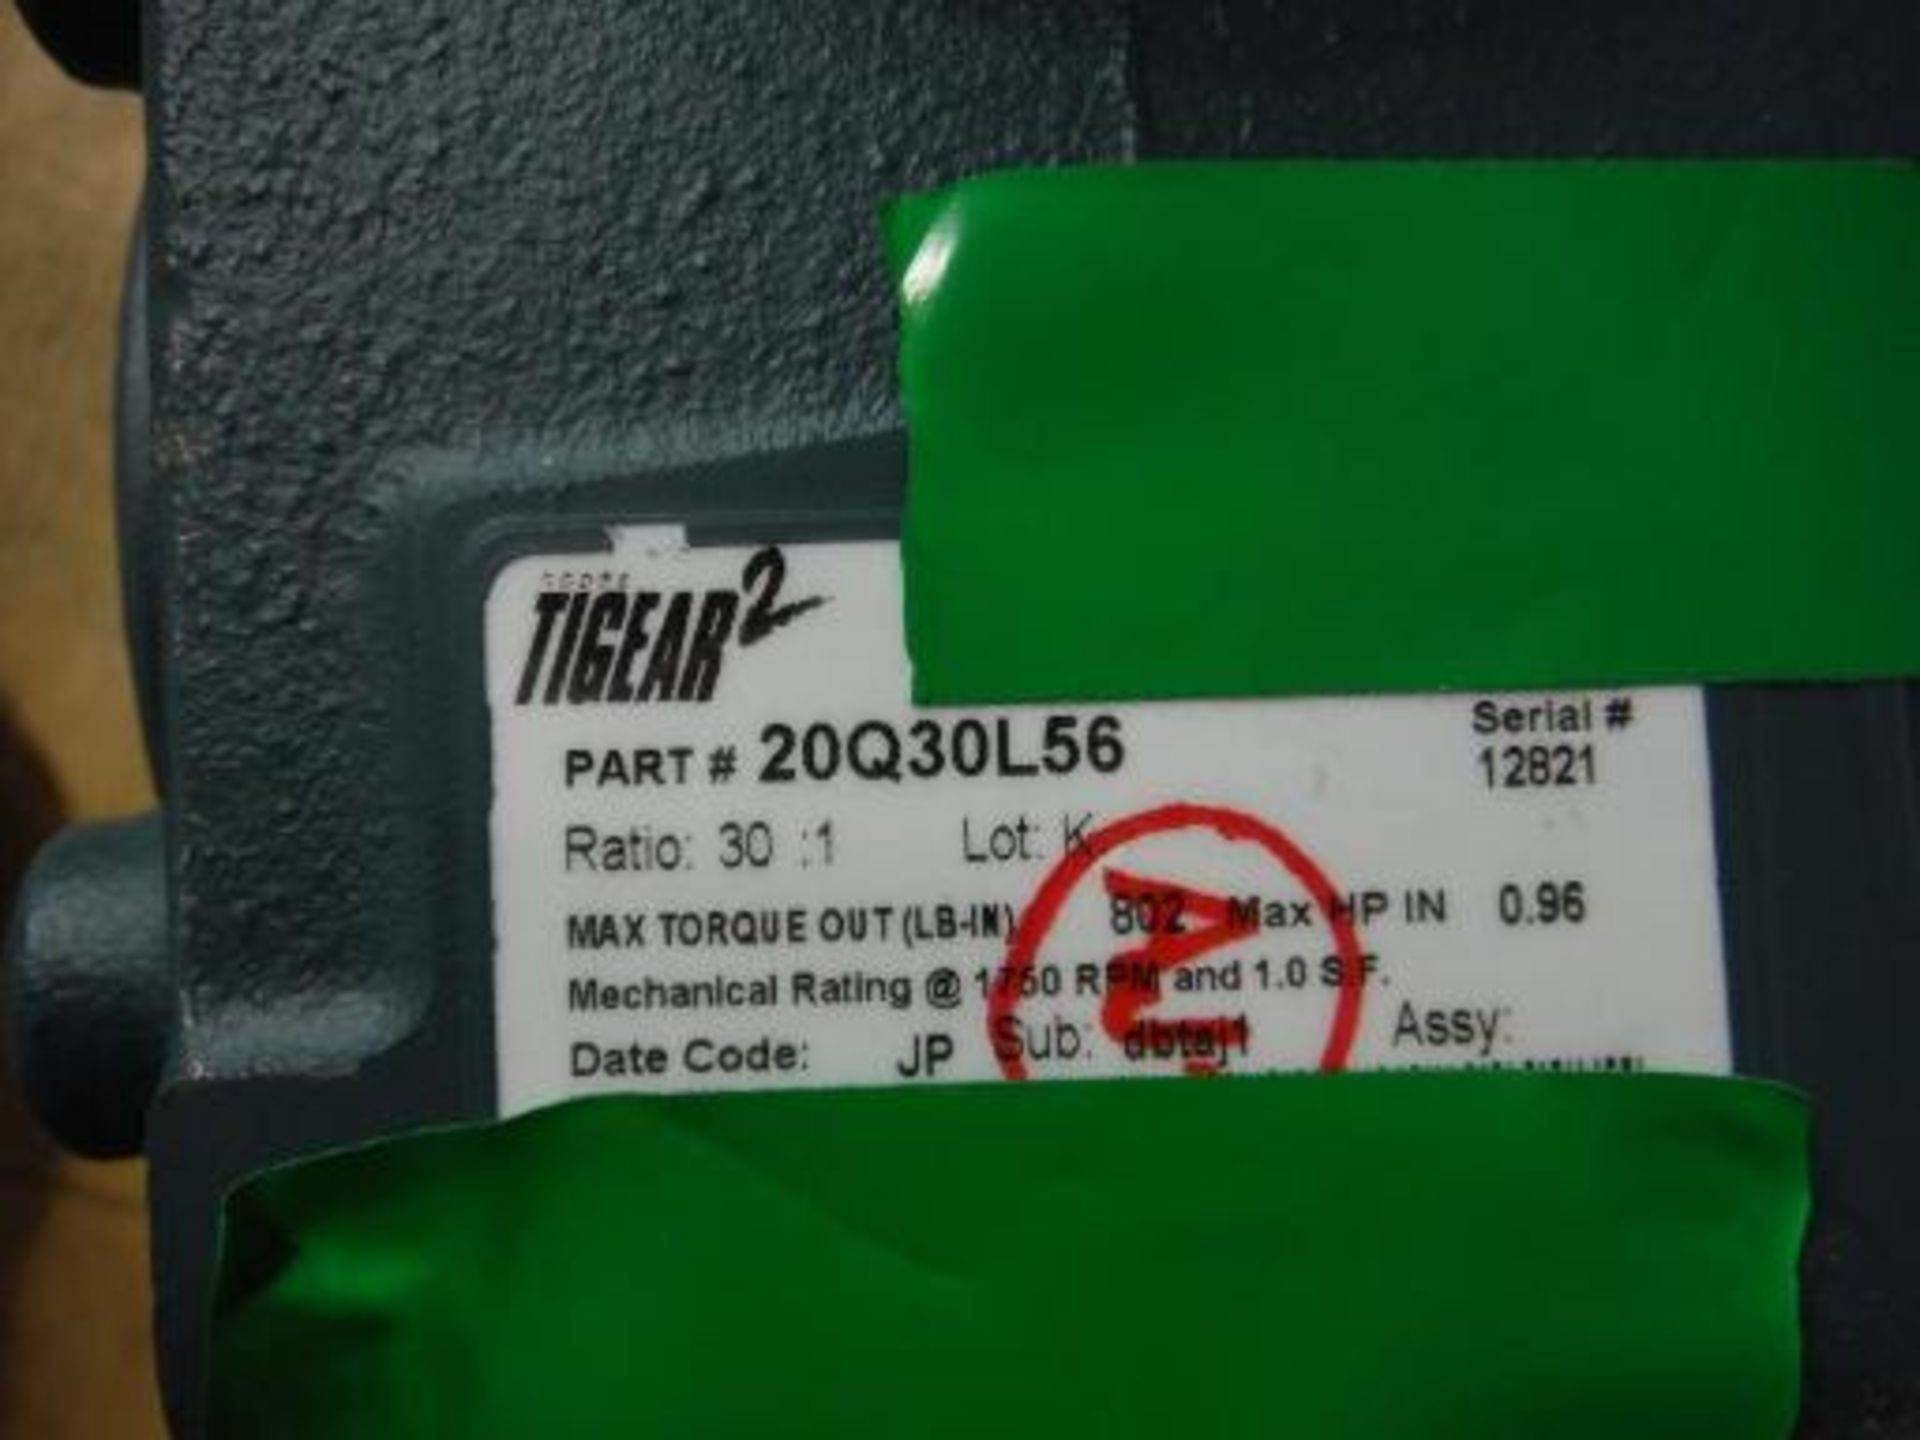 NEW Dodge Tigear 2 Gear Box, Ratio: 30:1. Located in Marion, Ohio Rigging Fee: $25 - Image 2 of 2